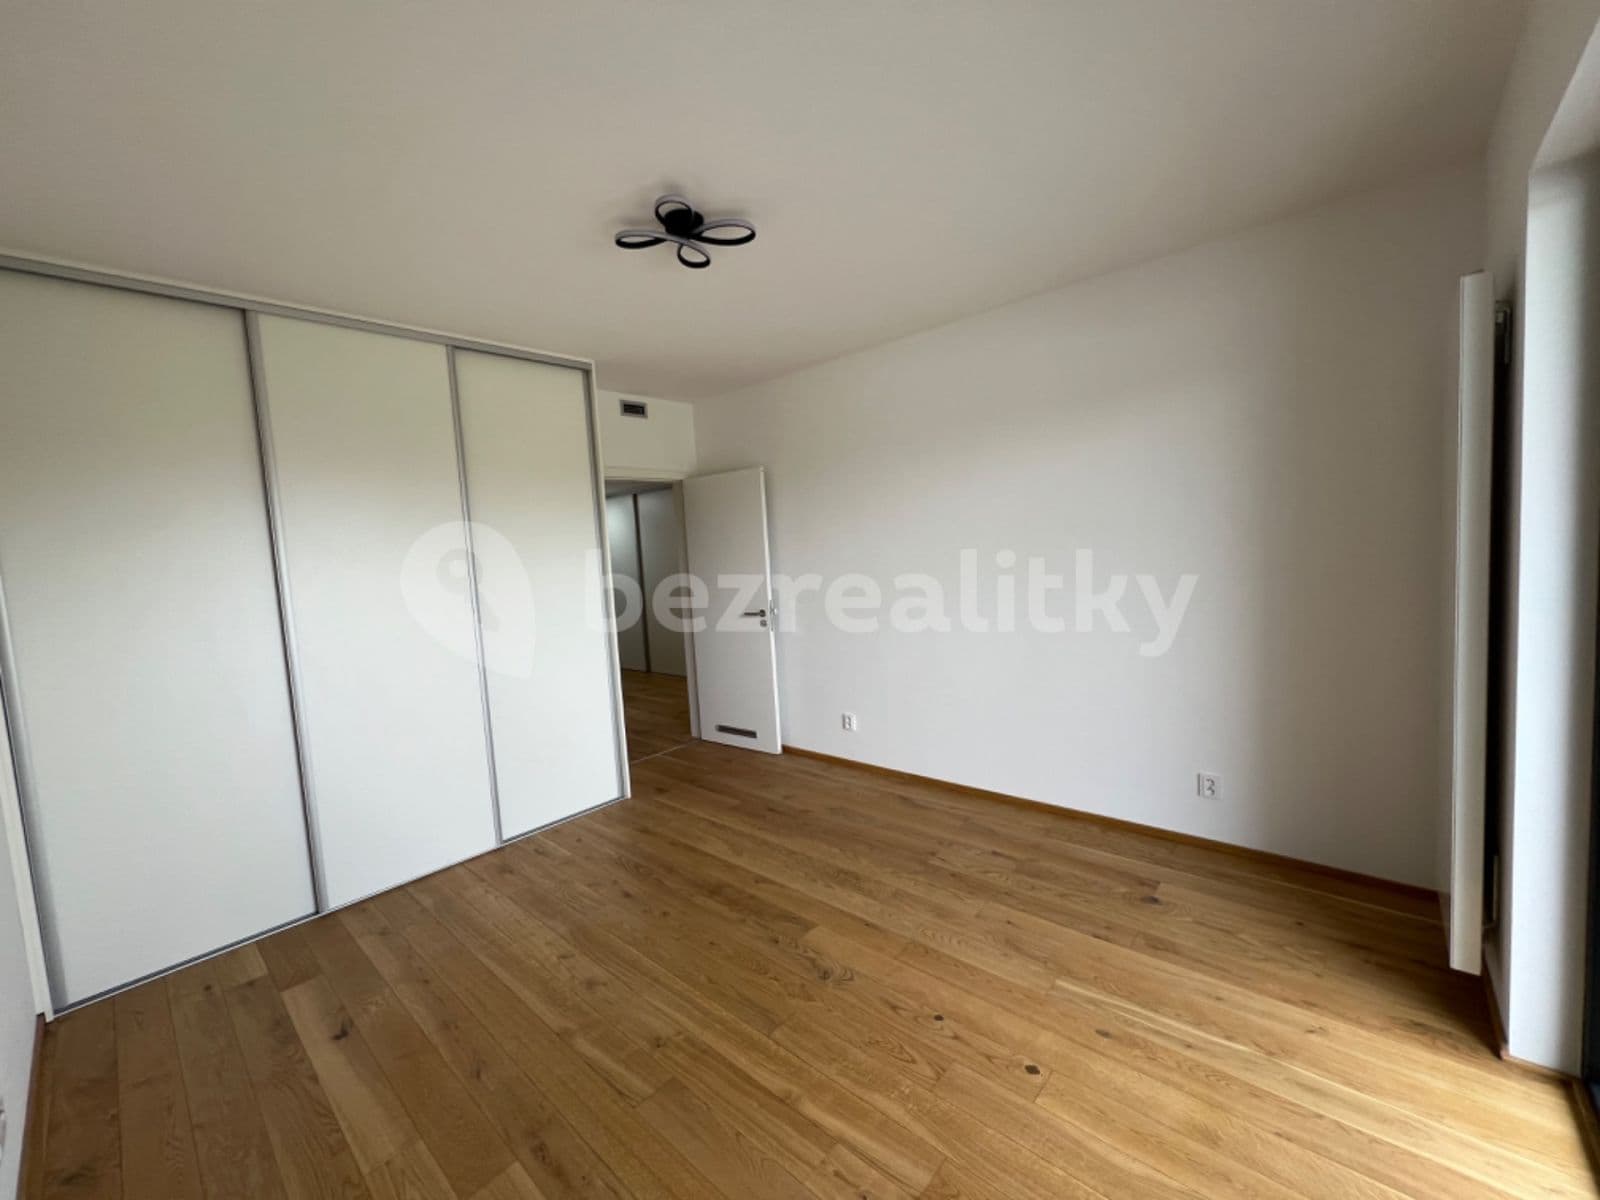 2 bedroom with open-plan kitchen flat to rent, 90 m², Vitáčkova, Prague, Prague